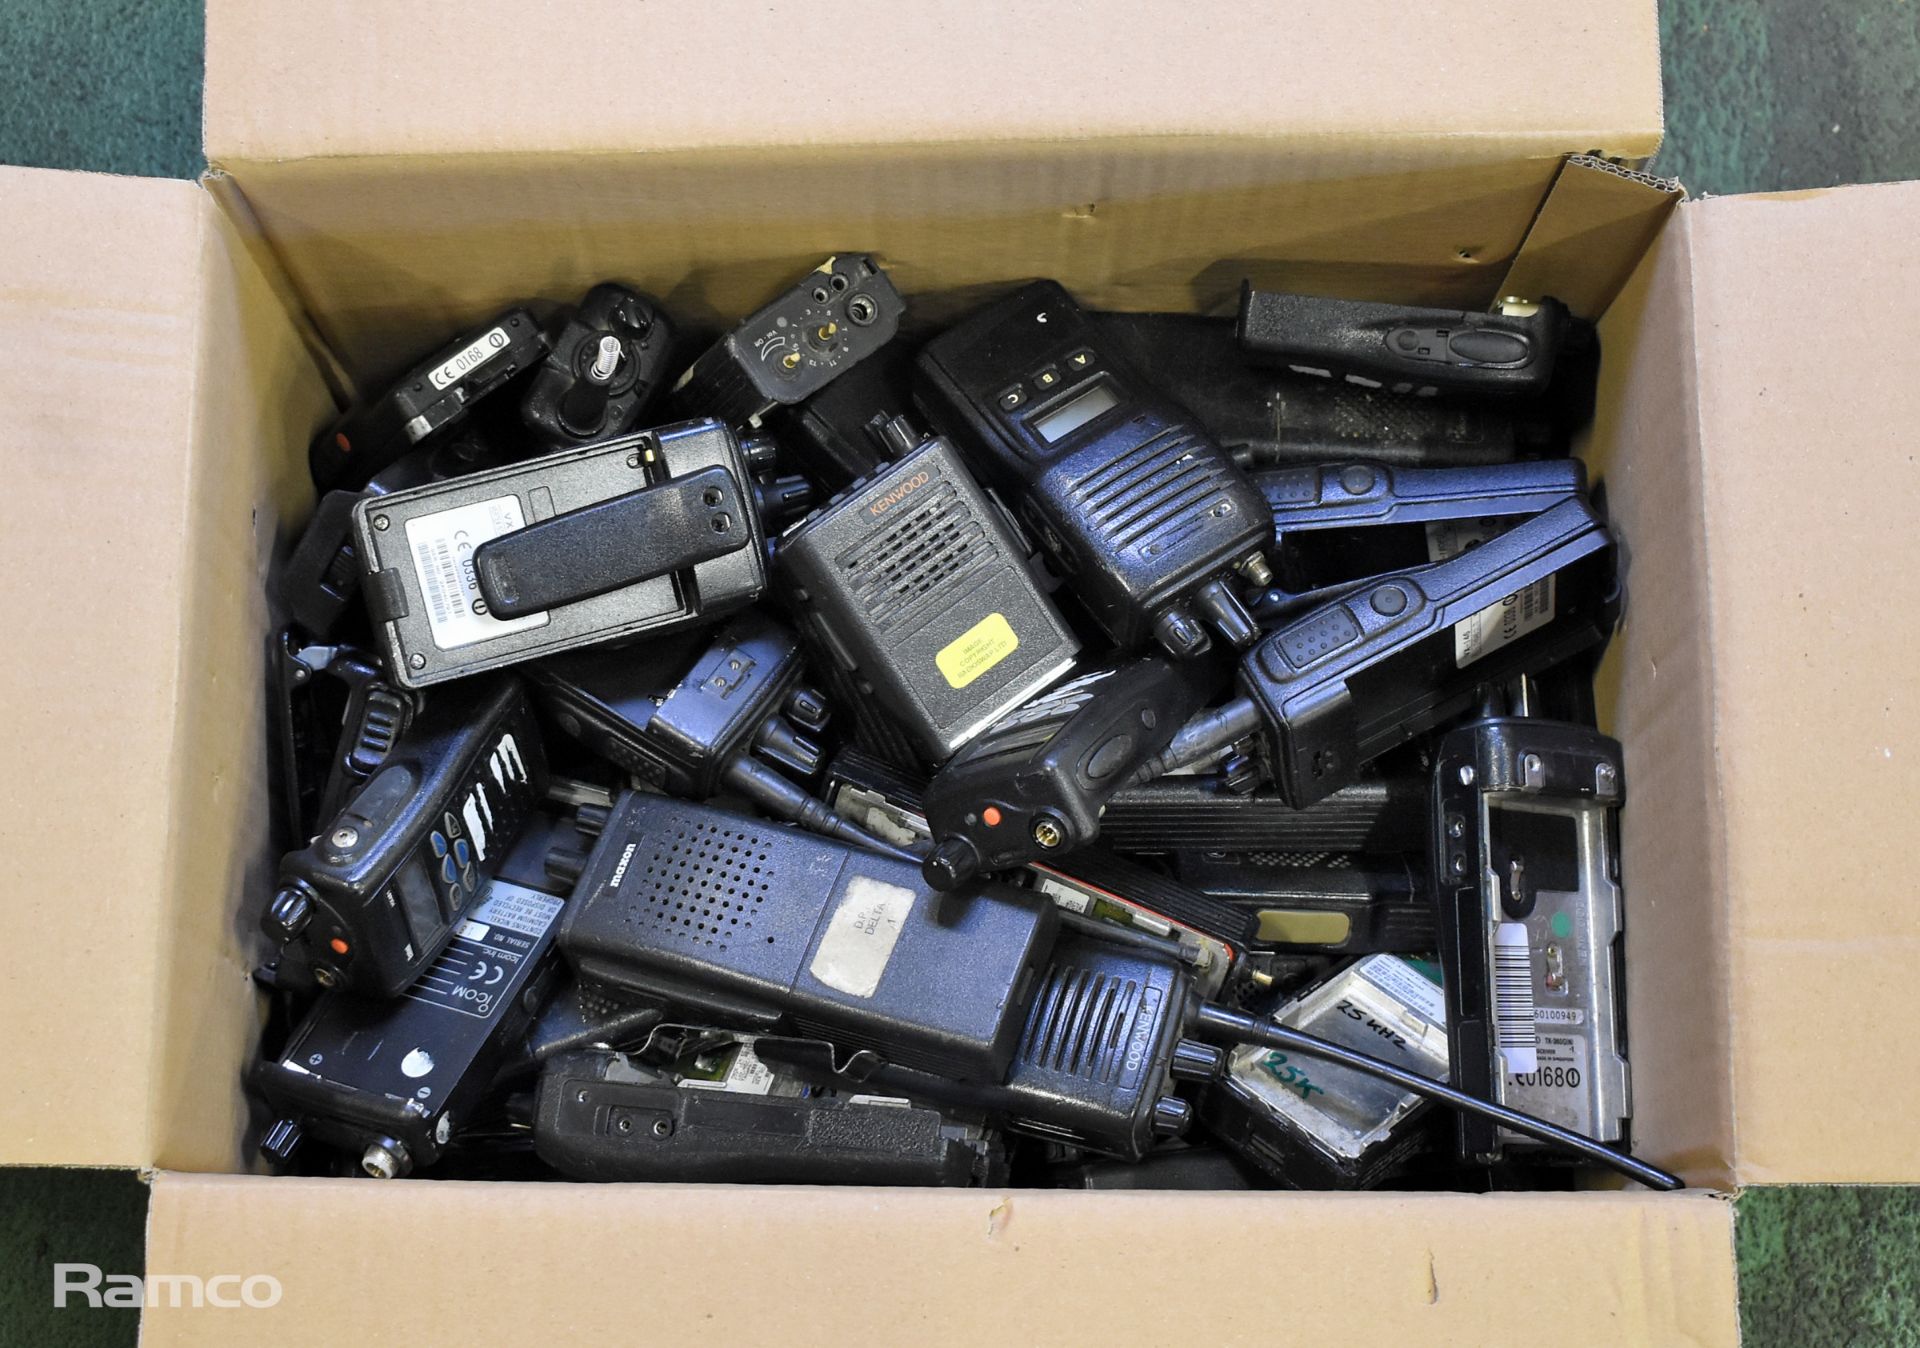 Approx. 57x assorted two way radios - 19x Motorola GP900, 19x GP300, 10x Vertex, 1x Icom, 1x Maxon,